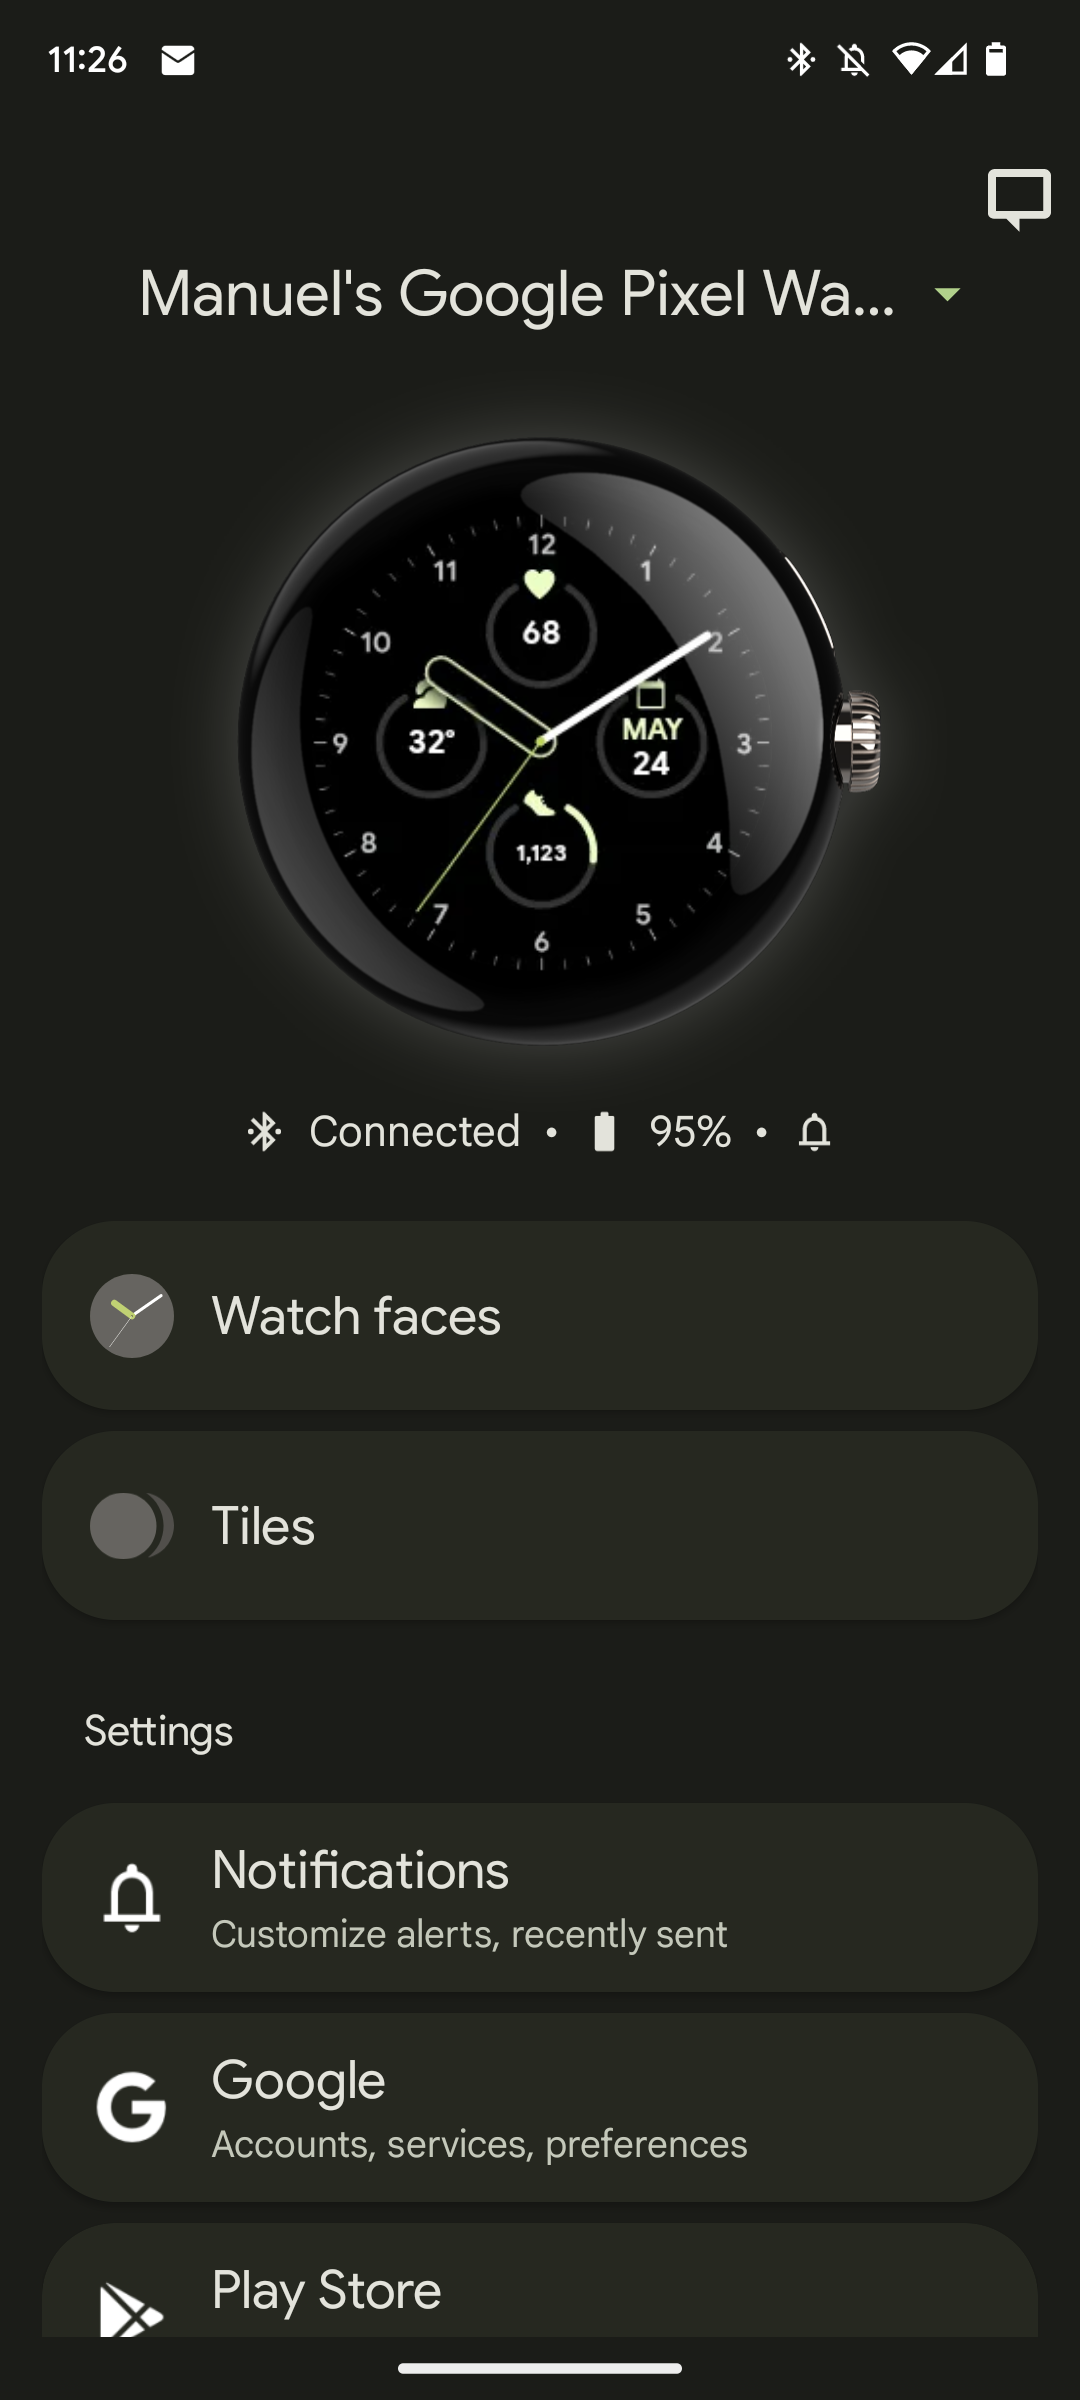 Google Pixel Watch customization options